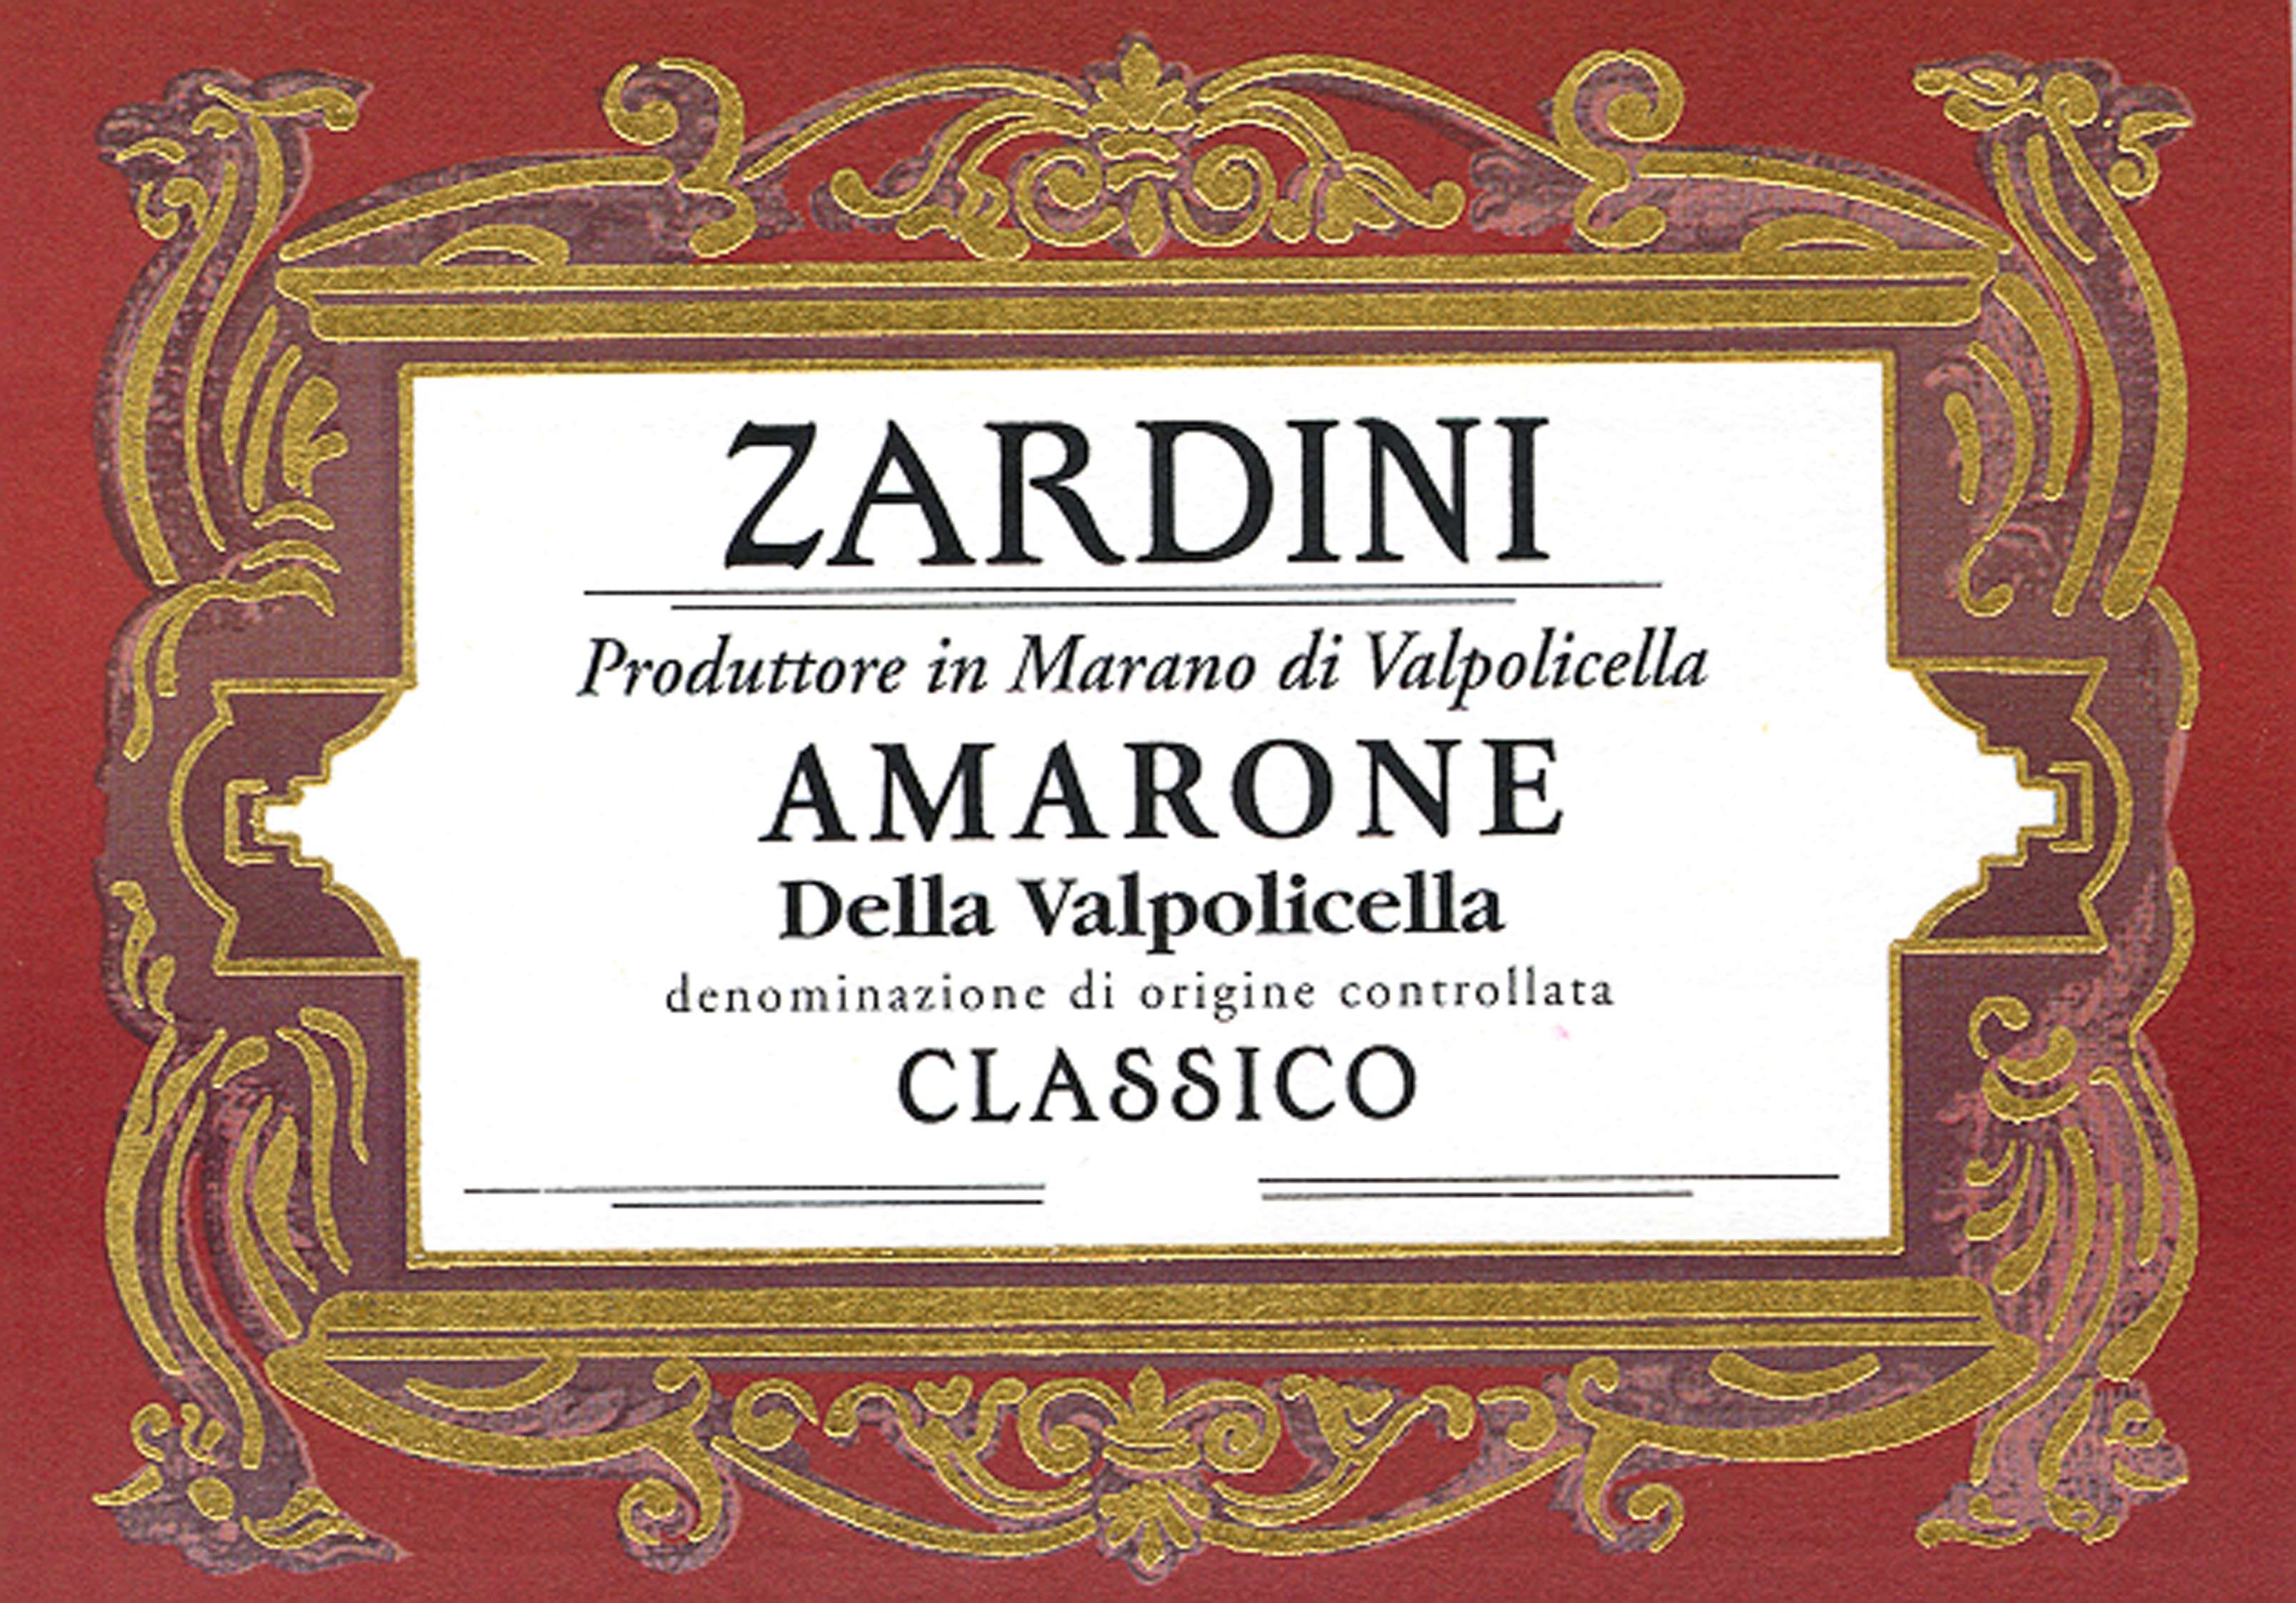 Zardini - Amarone label